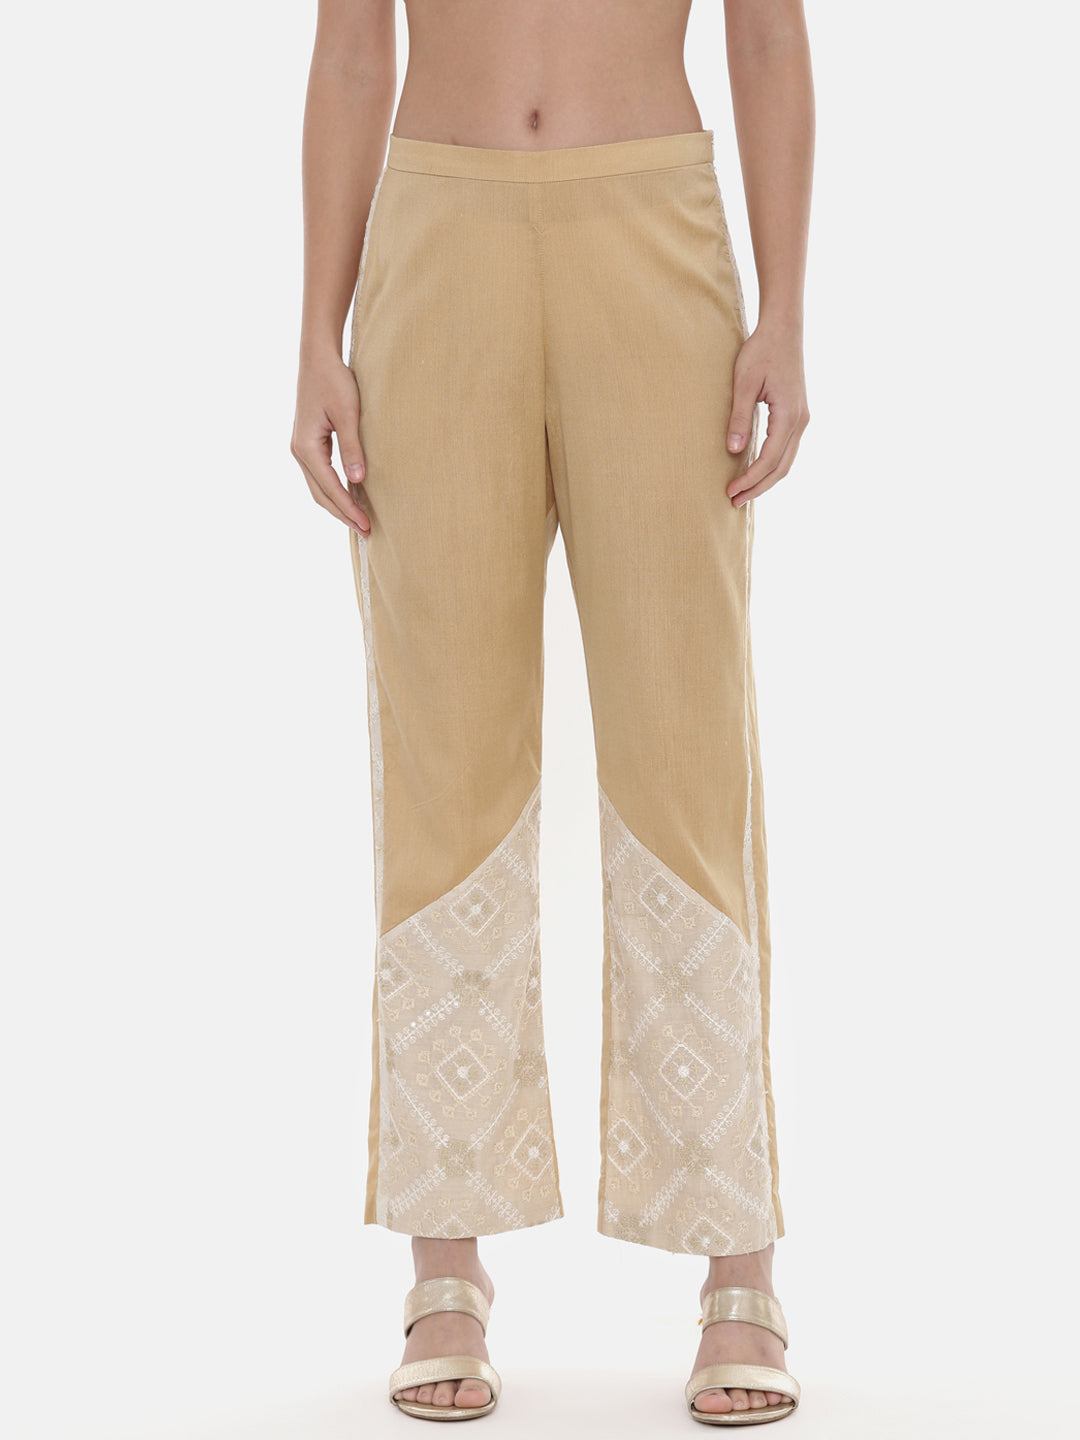 Gold Silk Embroidred Pants - ASPL024